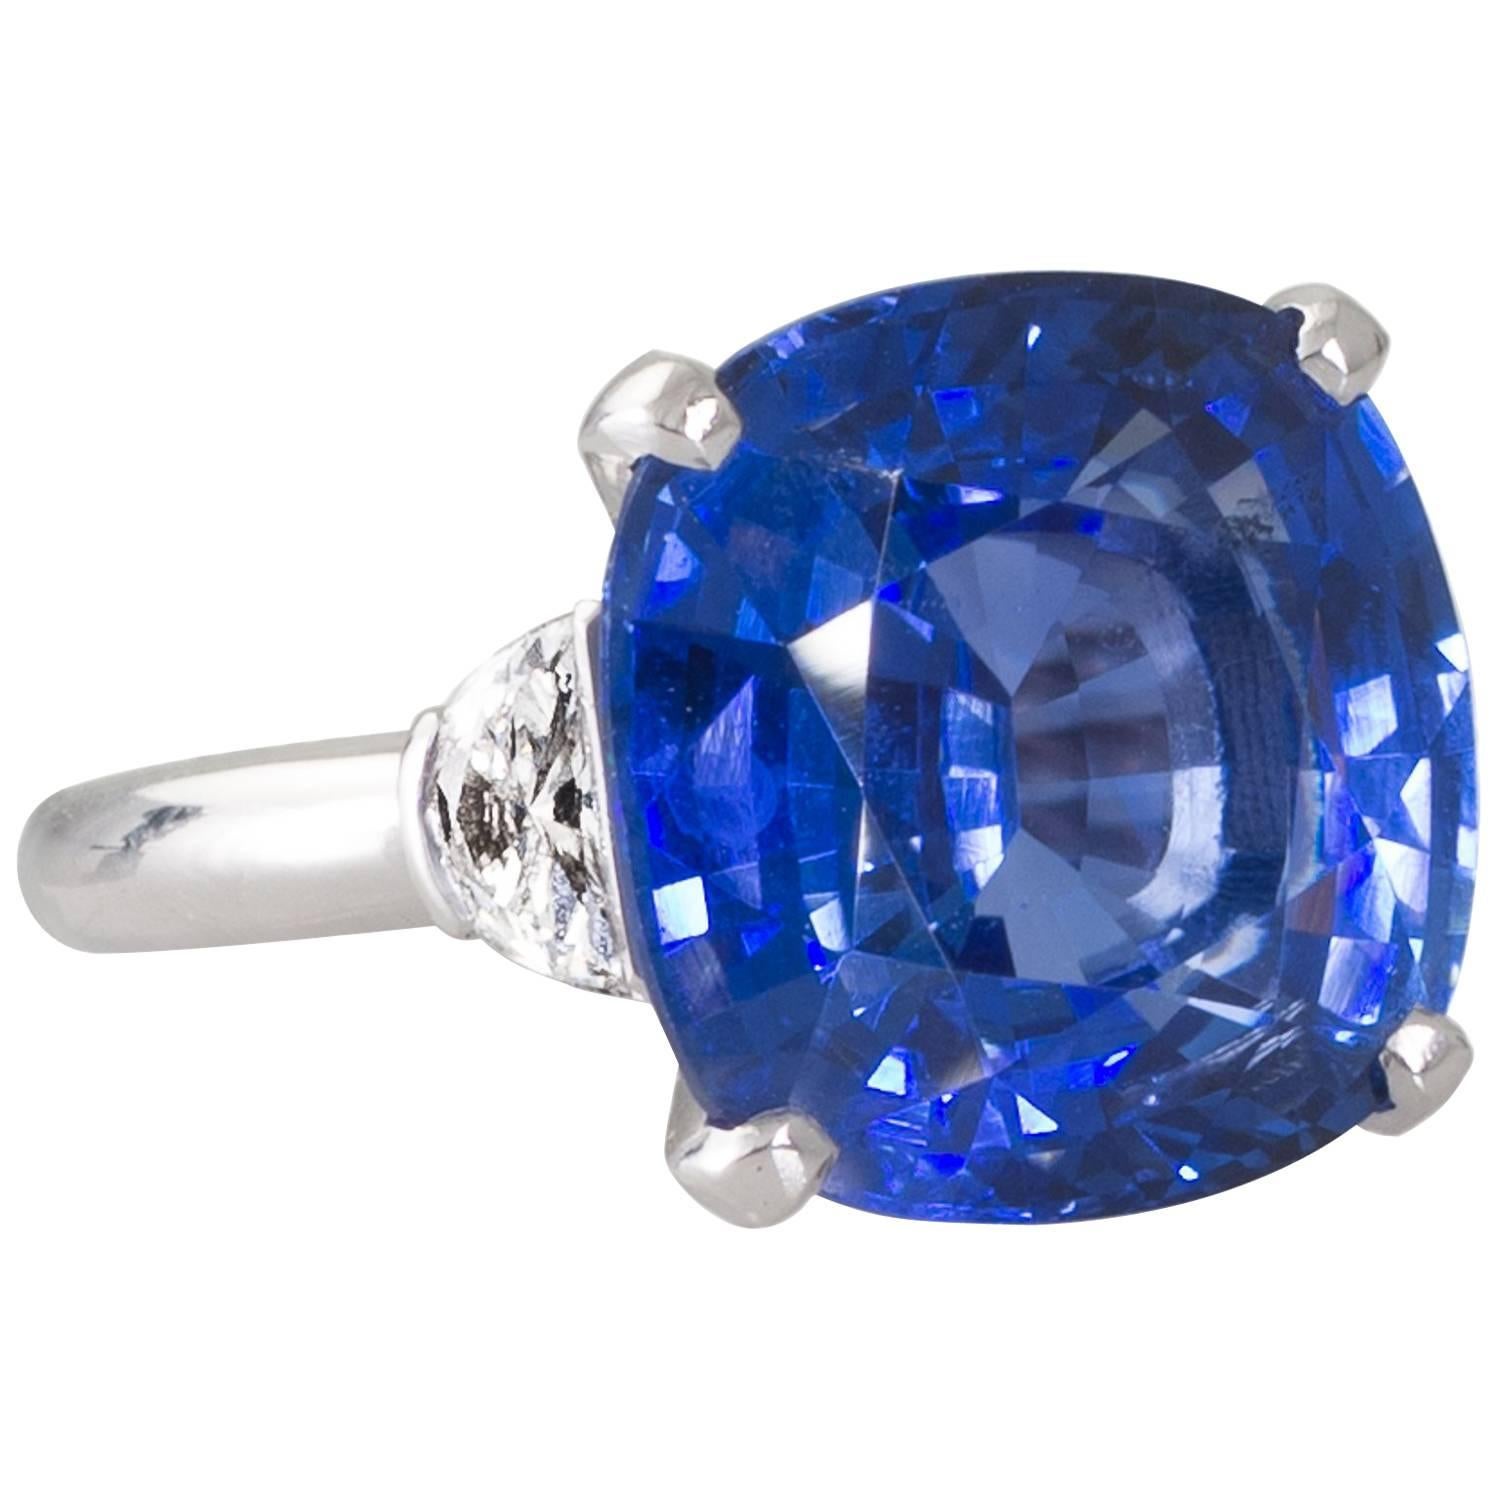 12.01 Carat GRS Certified Ceylon Sapphire Diamond Ring